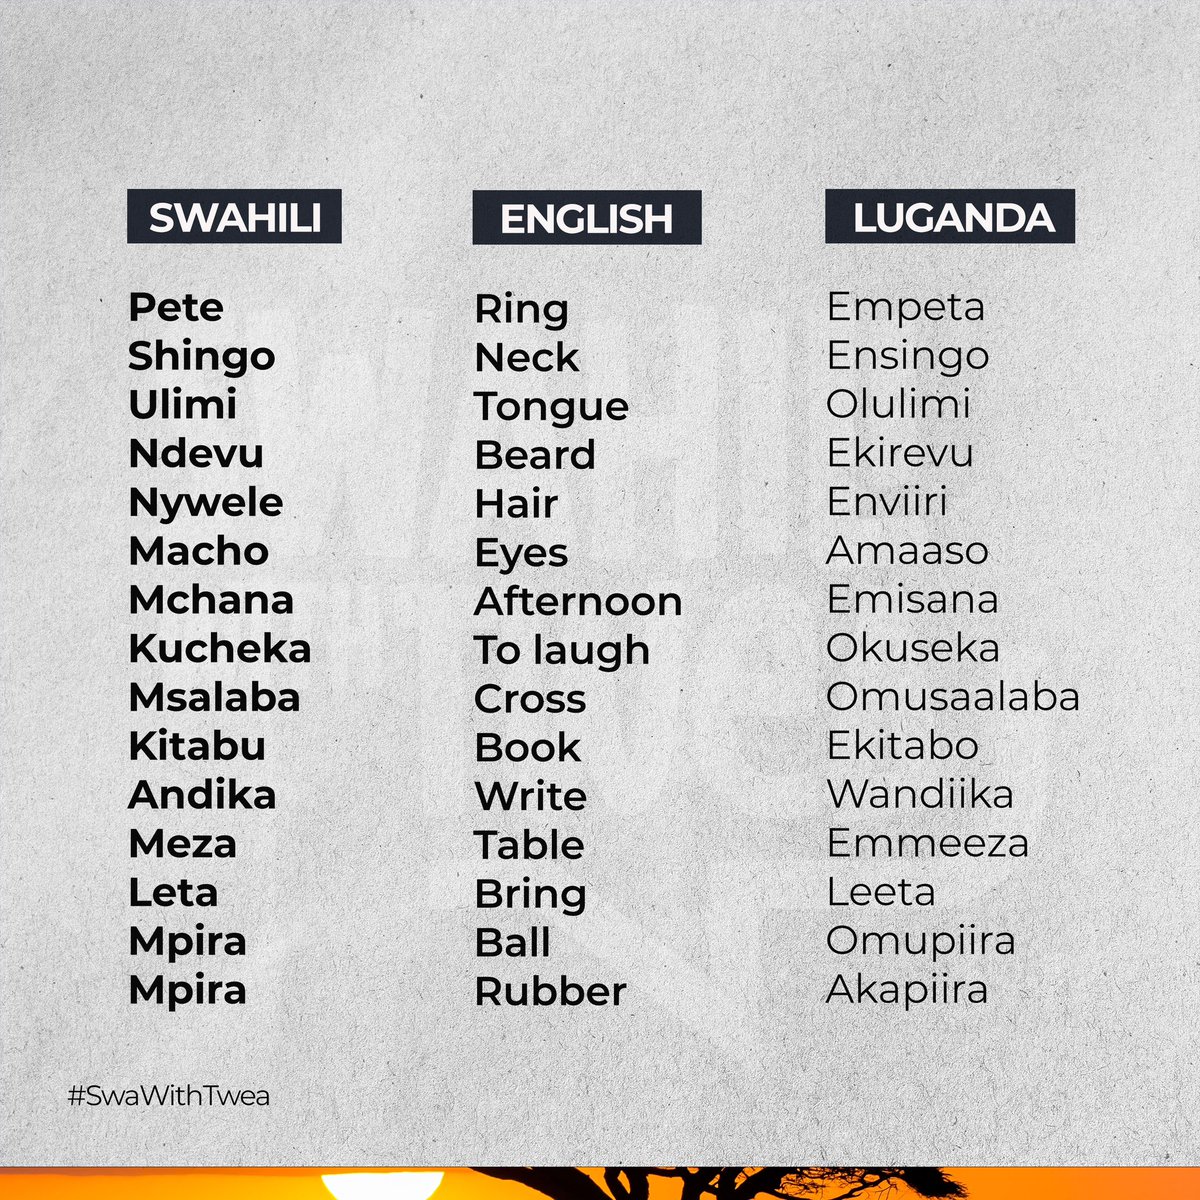 Hamjambo 
More close words/phrases in #Swahili & #Luganda
#SwaWithTwea